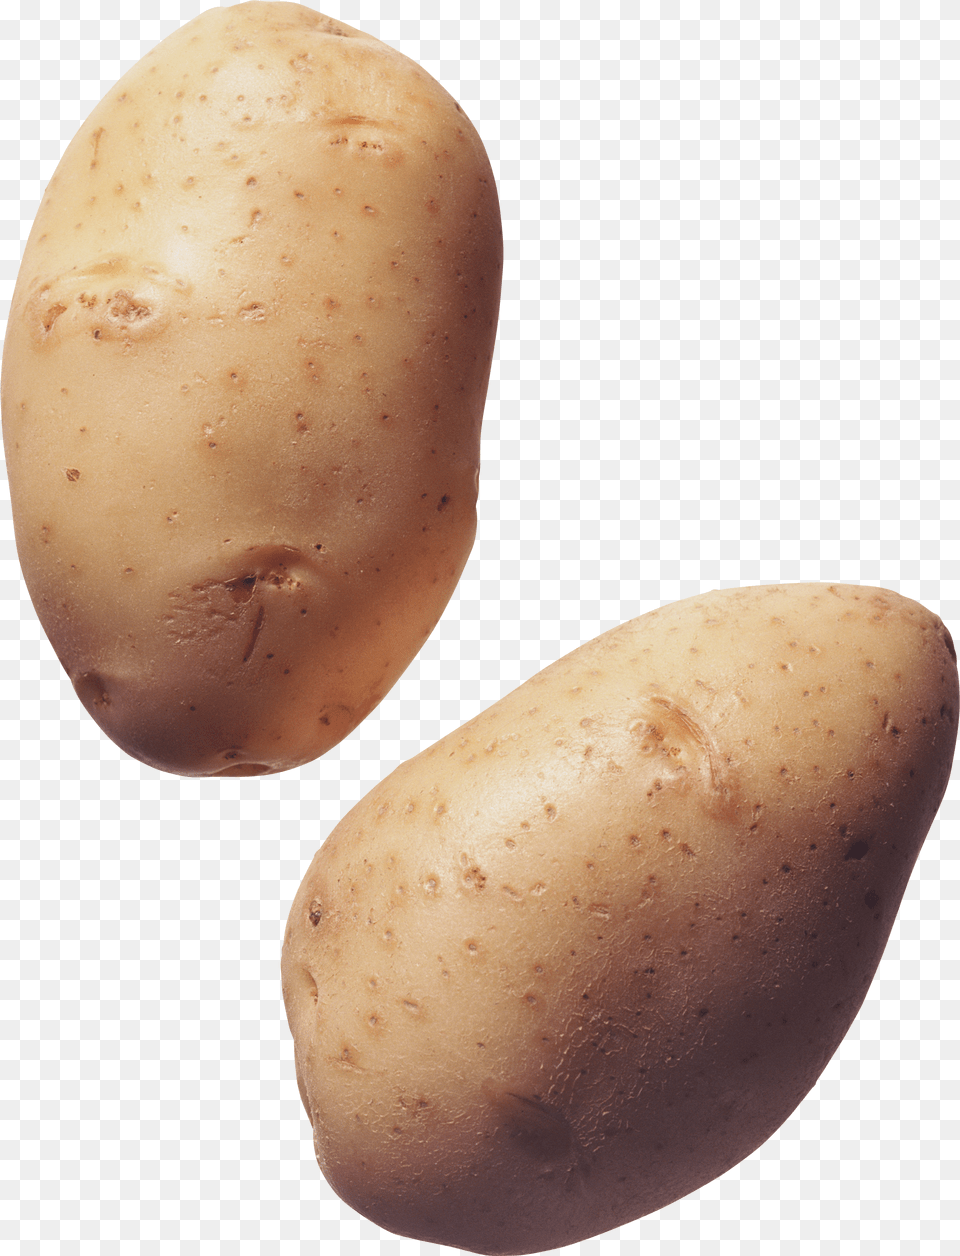 Potato, Vegetable, Food, Produce, Plant Png Image